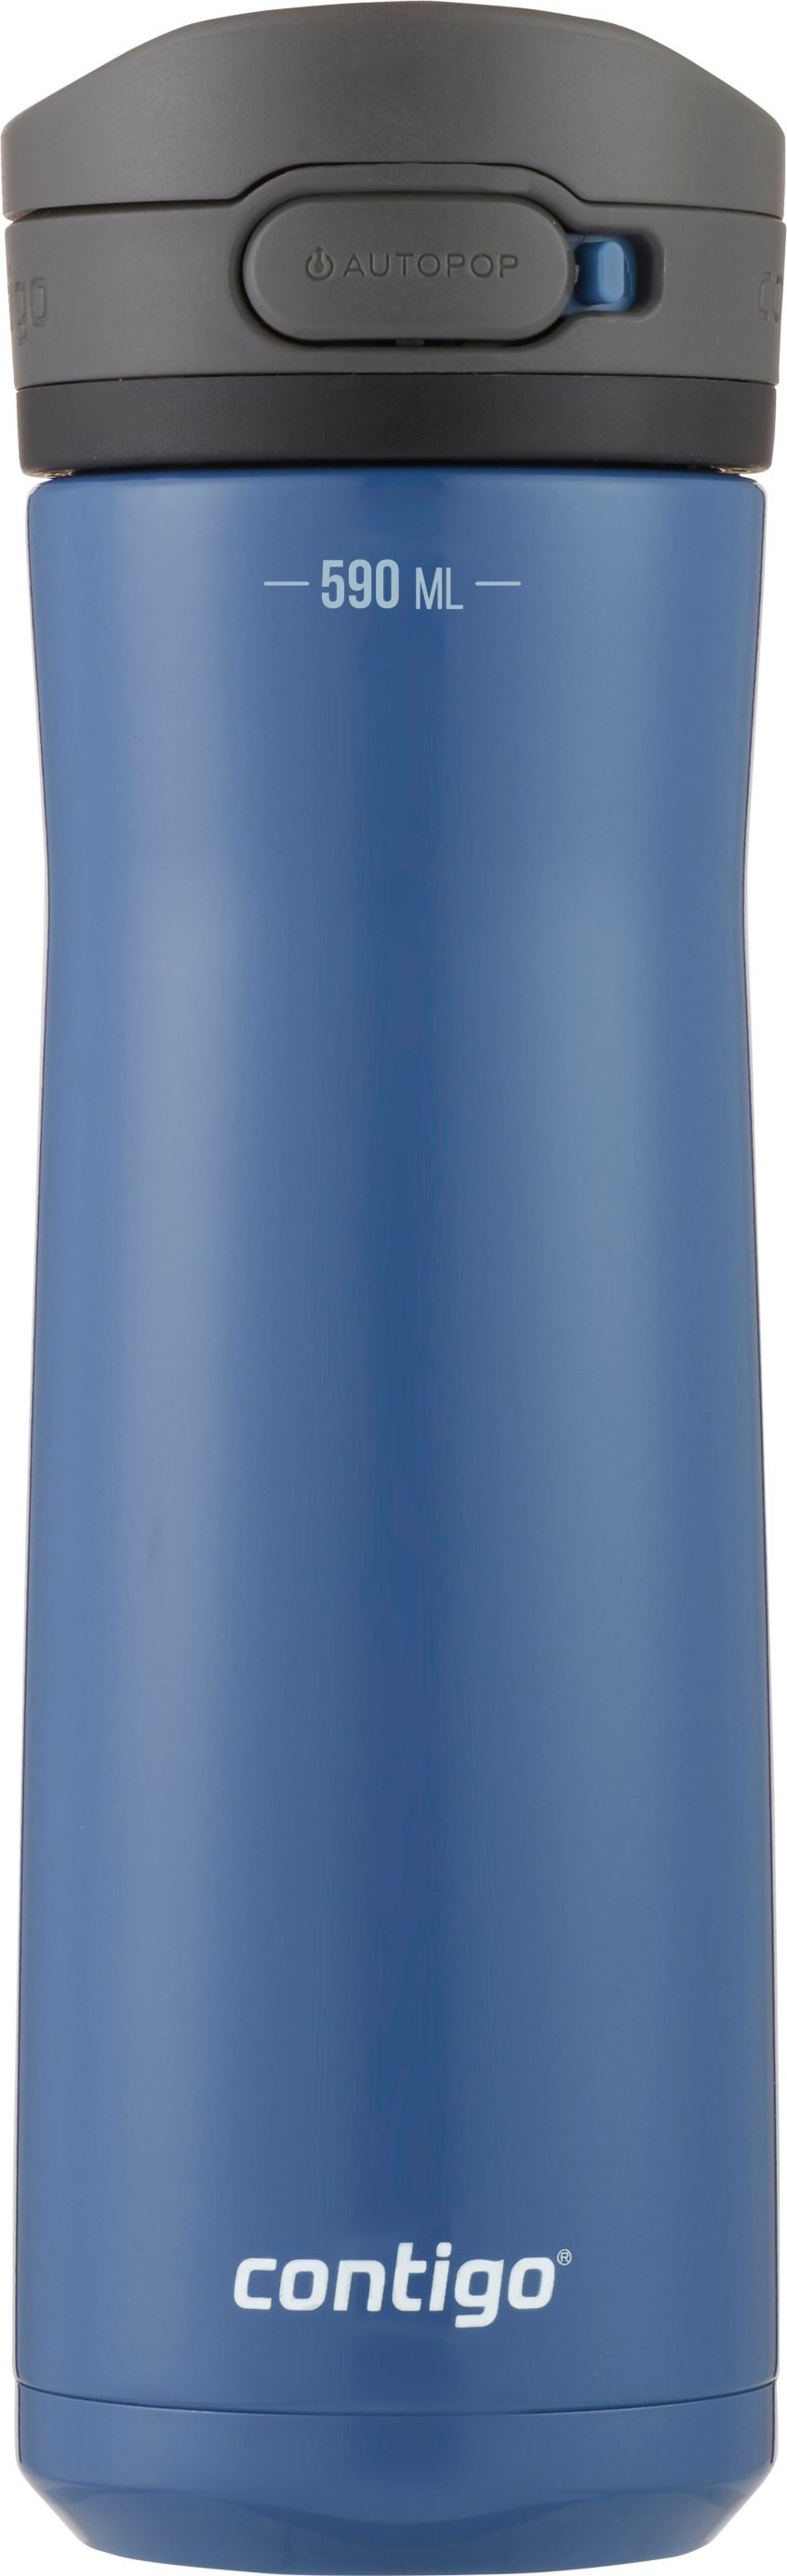 Jackson Chill Autopop Vacuum-Insulated Water Bottle 590 ml Blue Corn